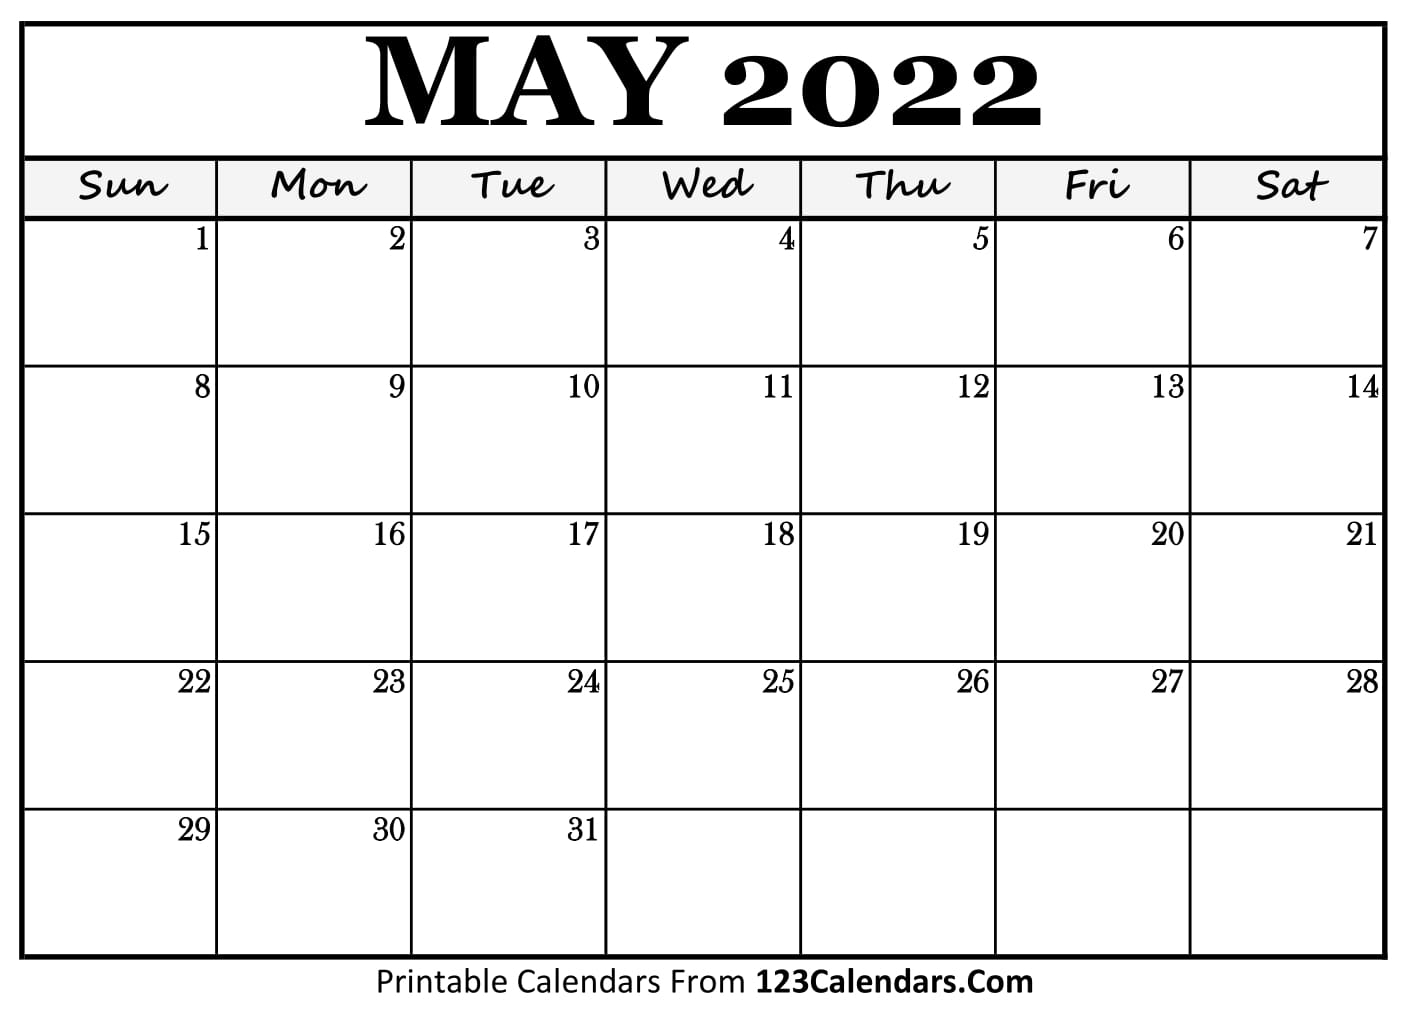 May Calendar 2022 Printable May 2022 Calendar Templates - 123Calendars.com